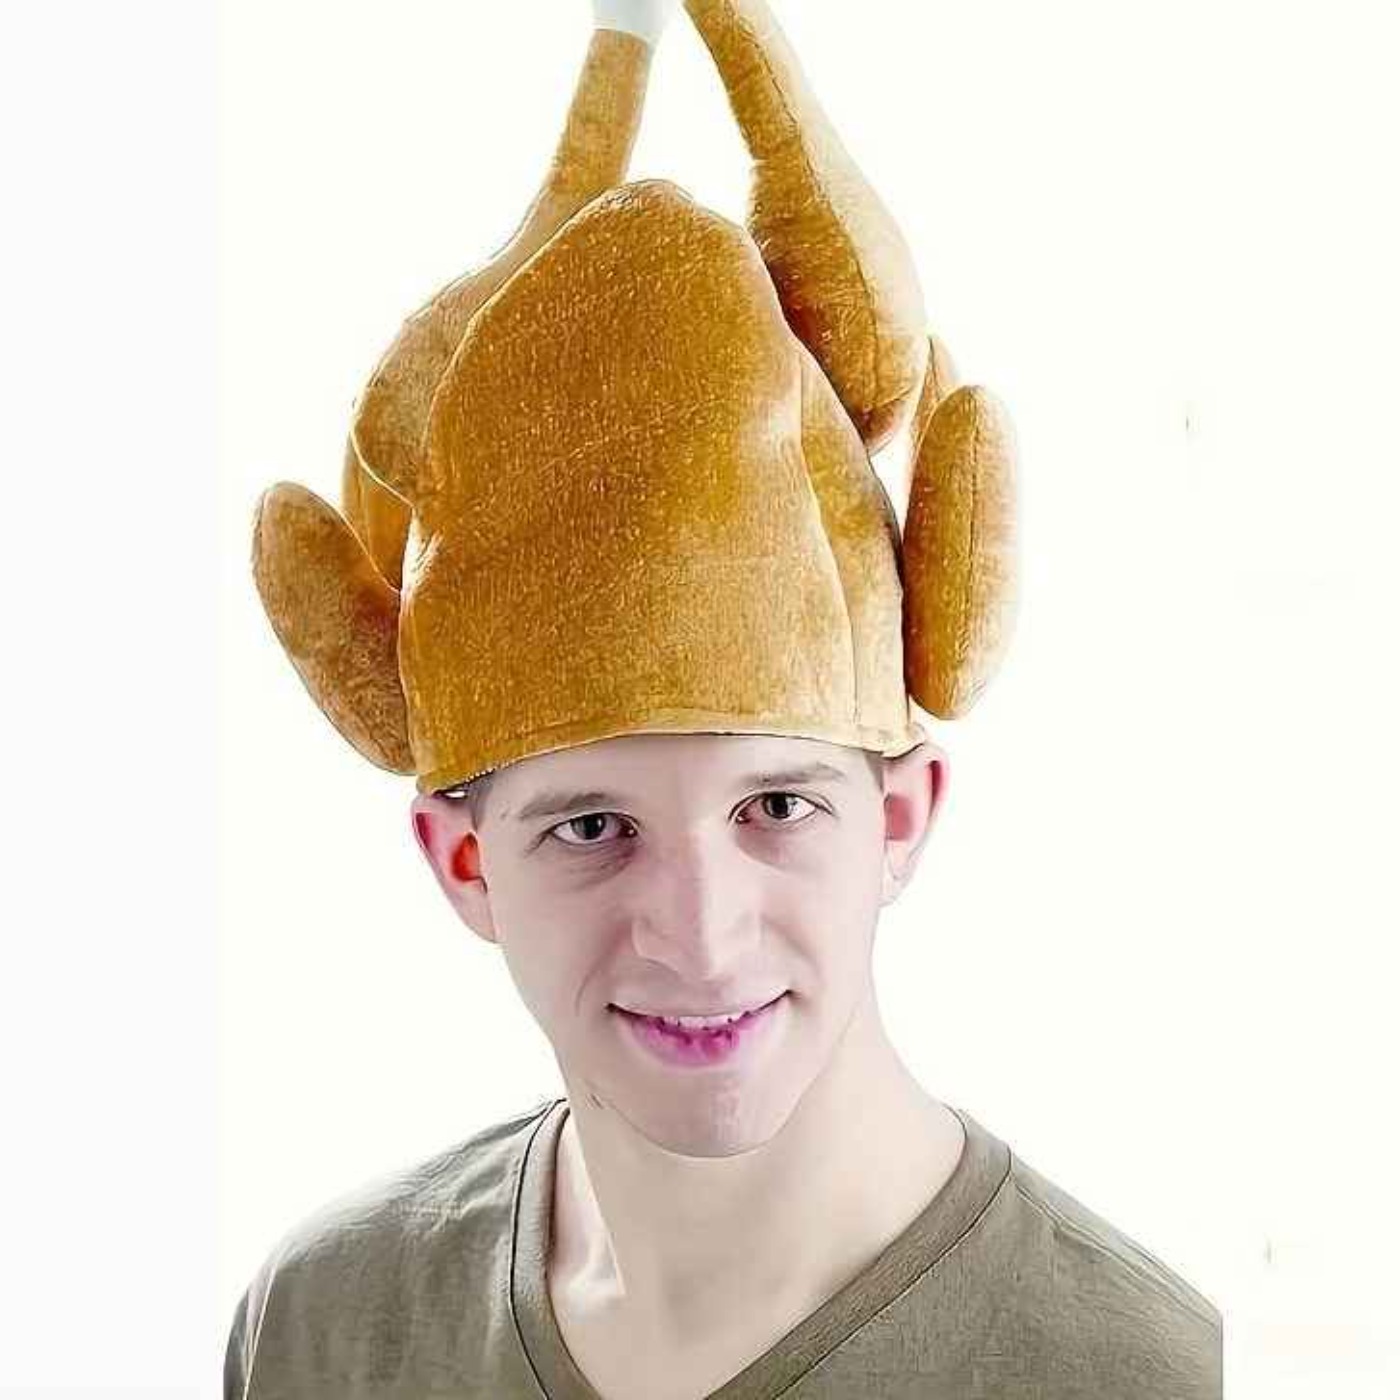 Why do we eat turkey at Xmas? A Full English festive special!